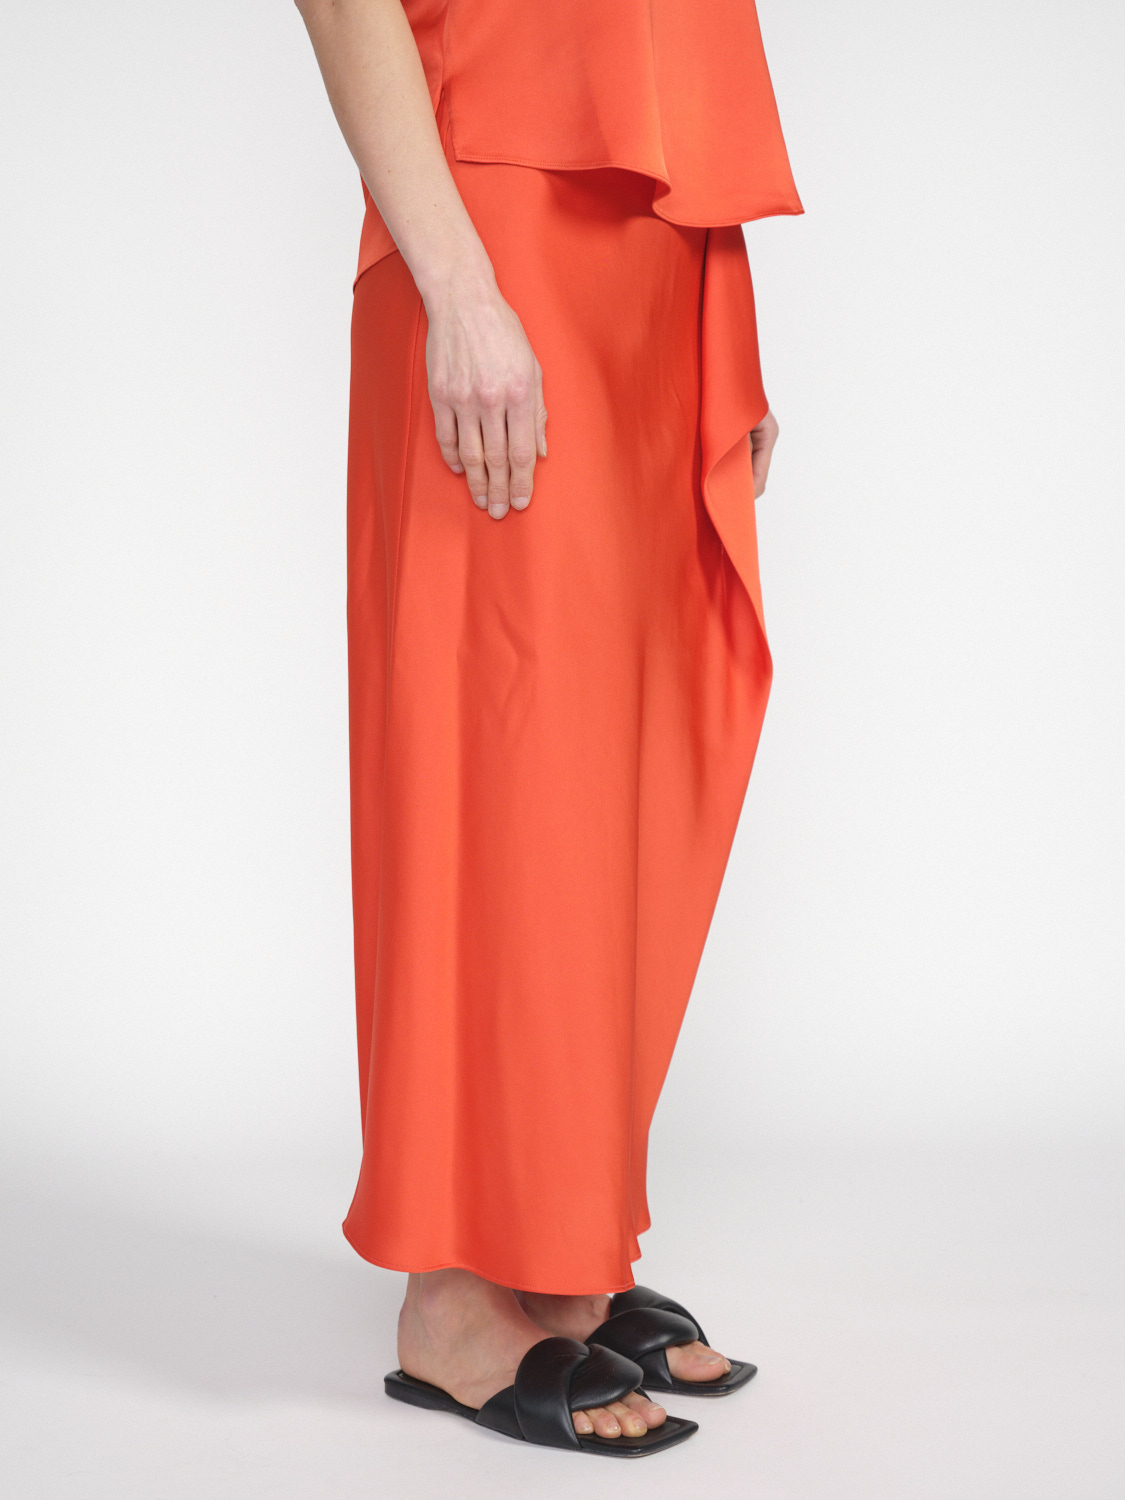 Simkhai Blane – Skirt with cadcading ruffle detail    red 36